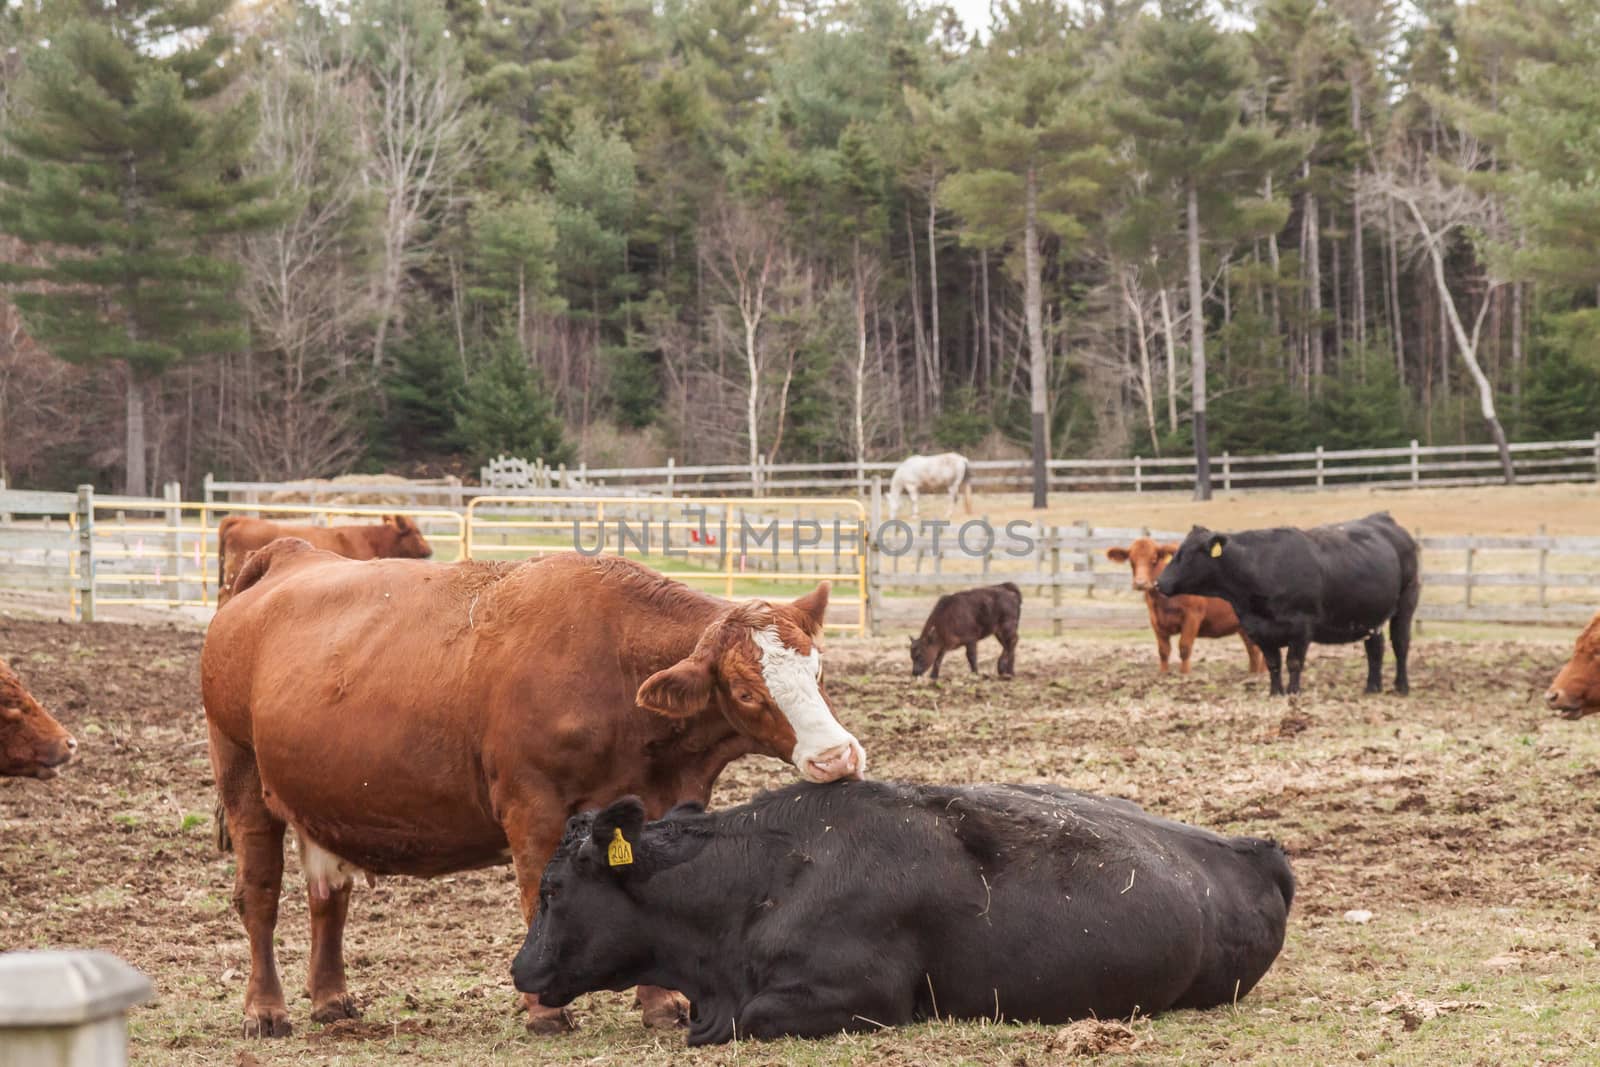 Cows on a farm in Chester, Nova Scotia by Ralli